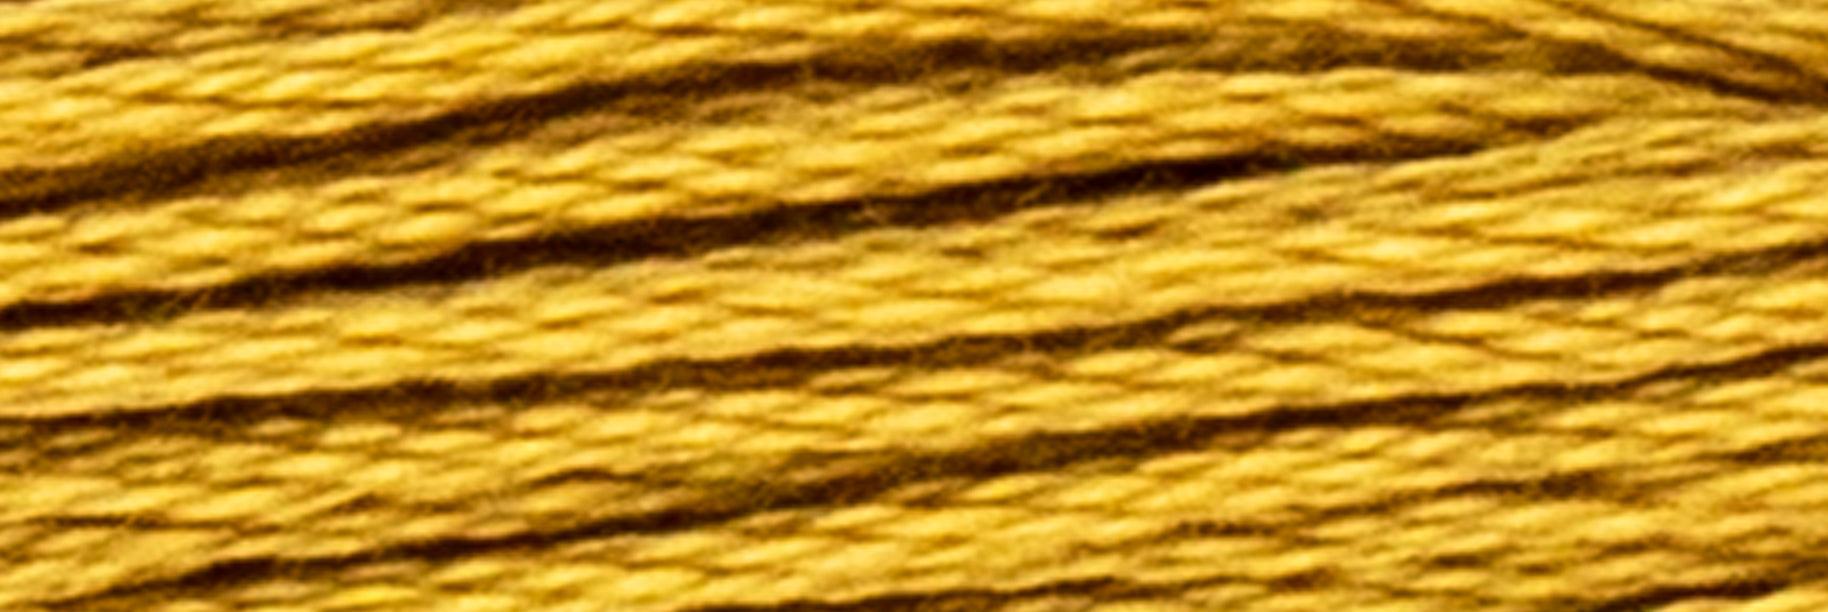 Stranded Cotton Luca-S - 341 / DMC 680 / Anchor 901 - Luca-S Stranded Cotton